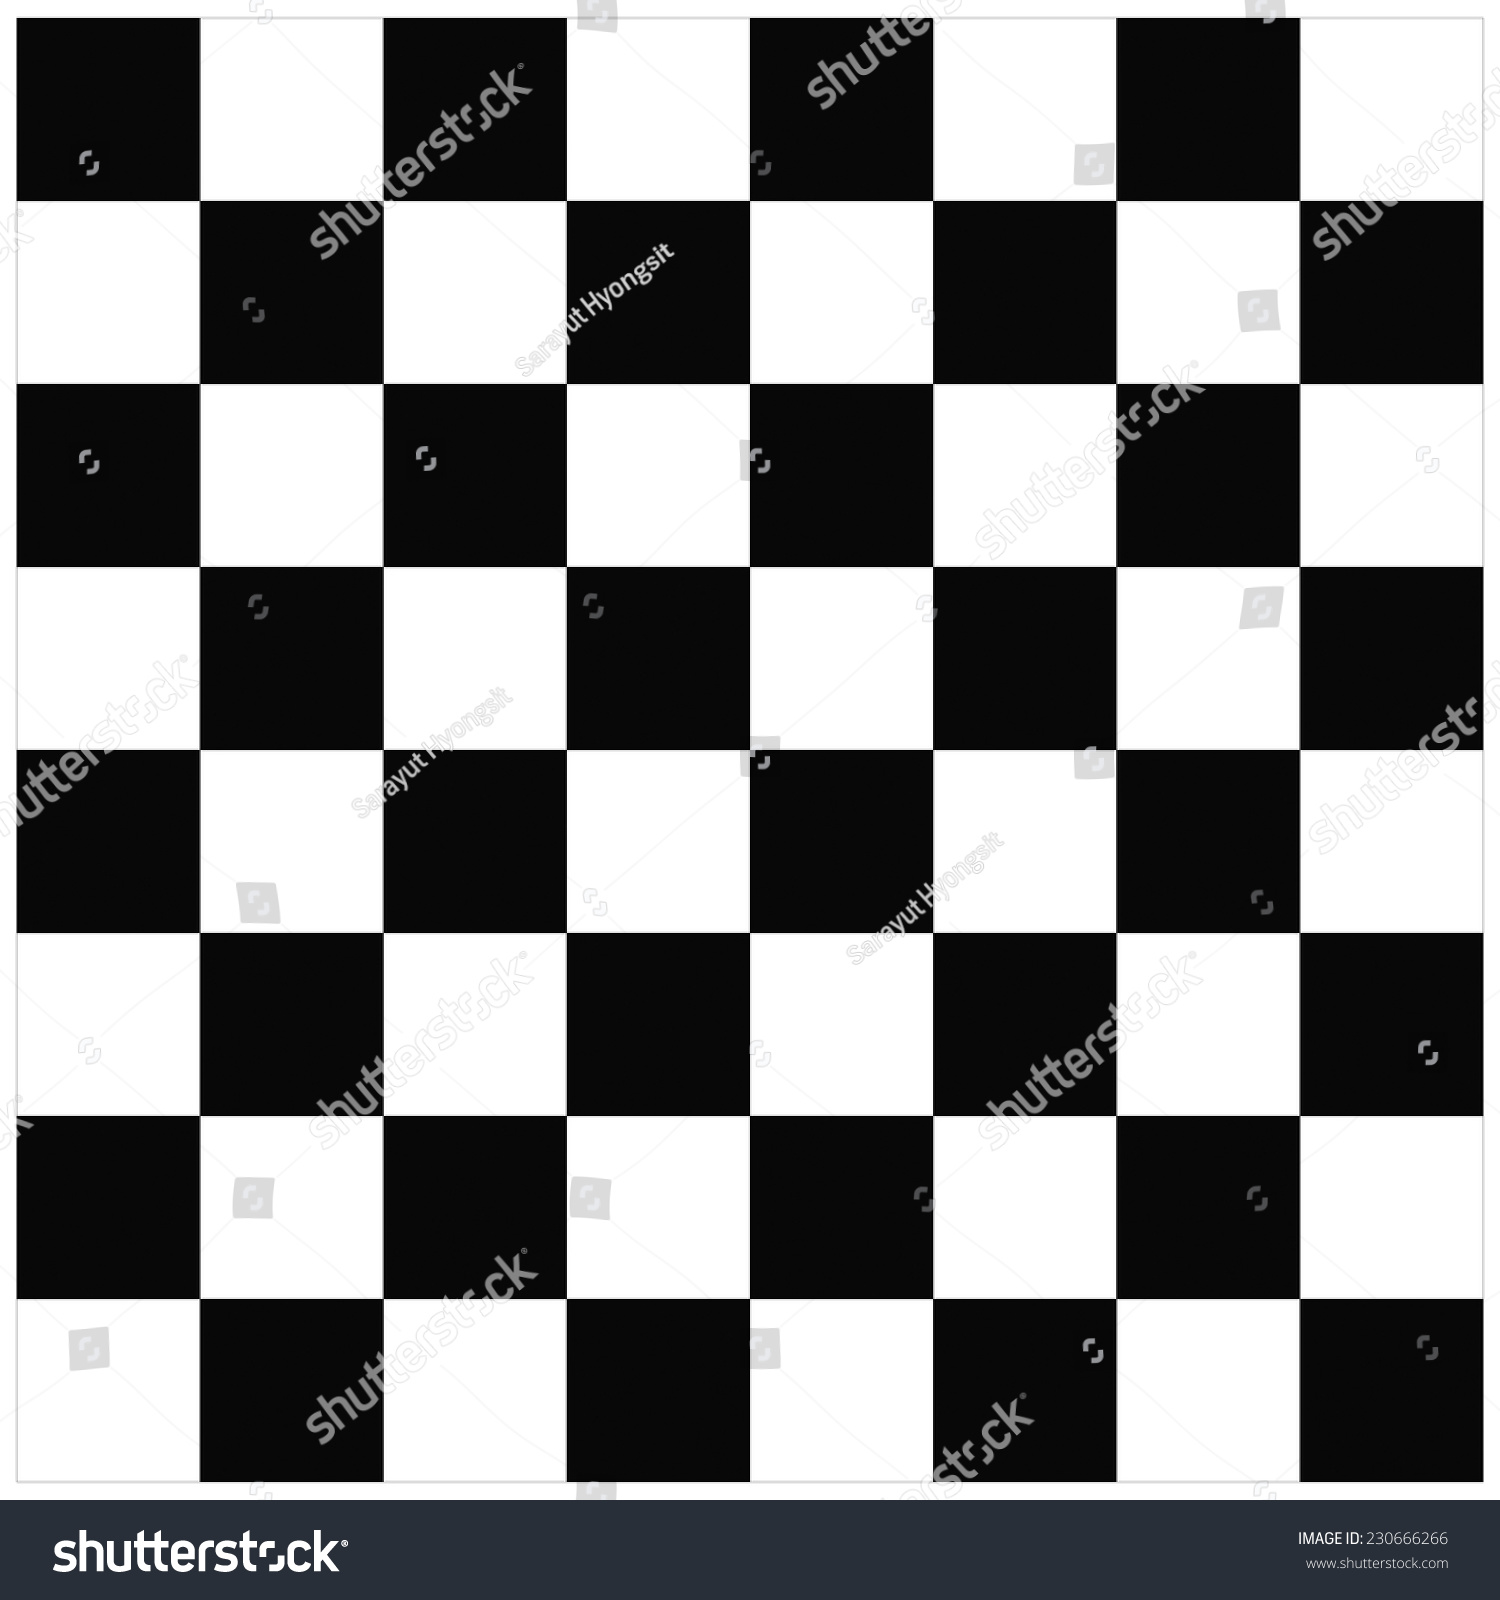 stock-vector-black-and-white-squares-230666266.jpg